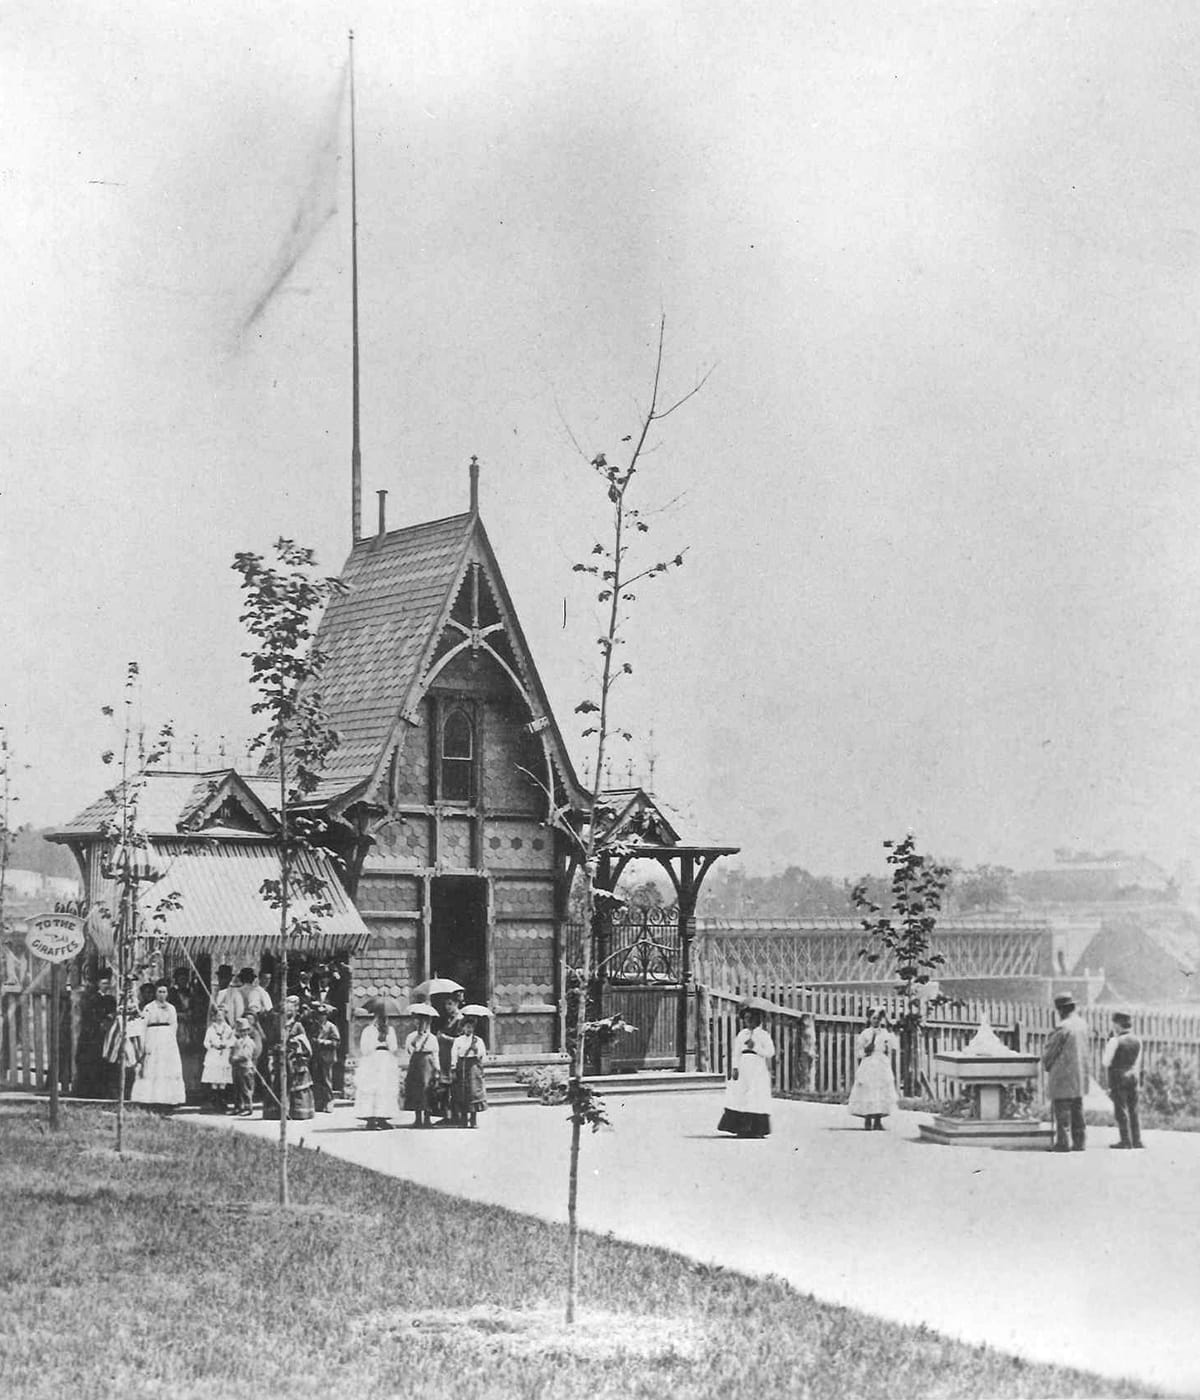 Vintage image of North Gate